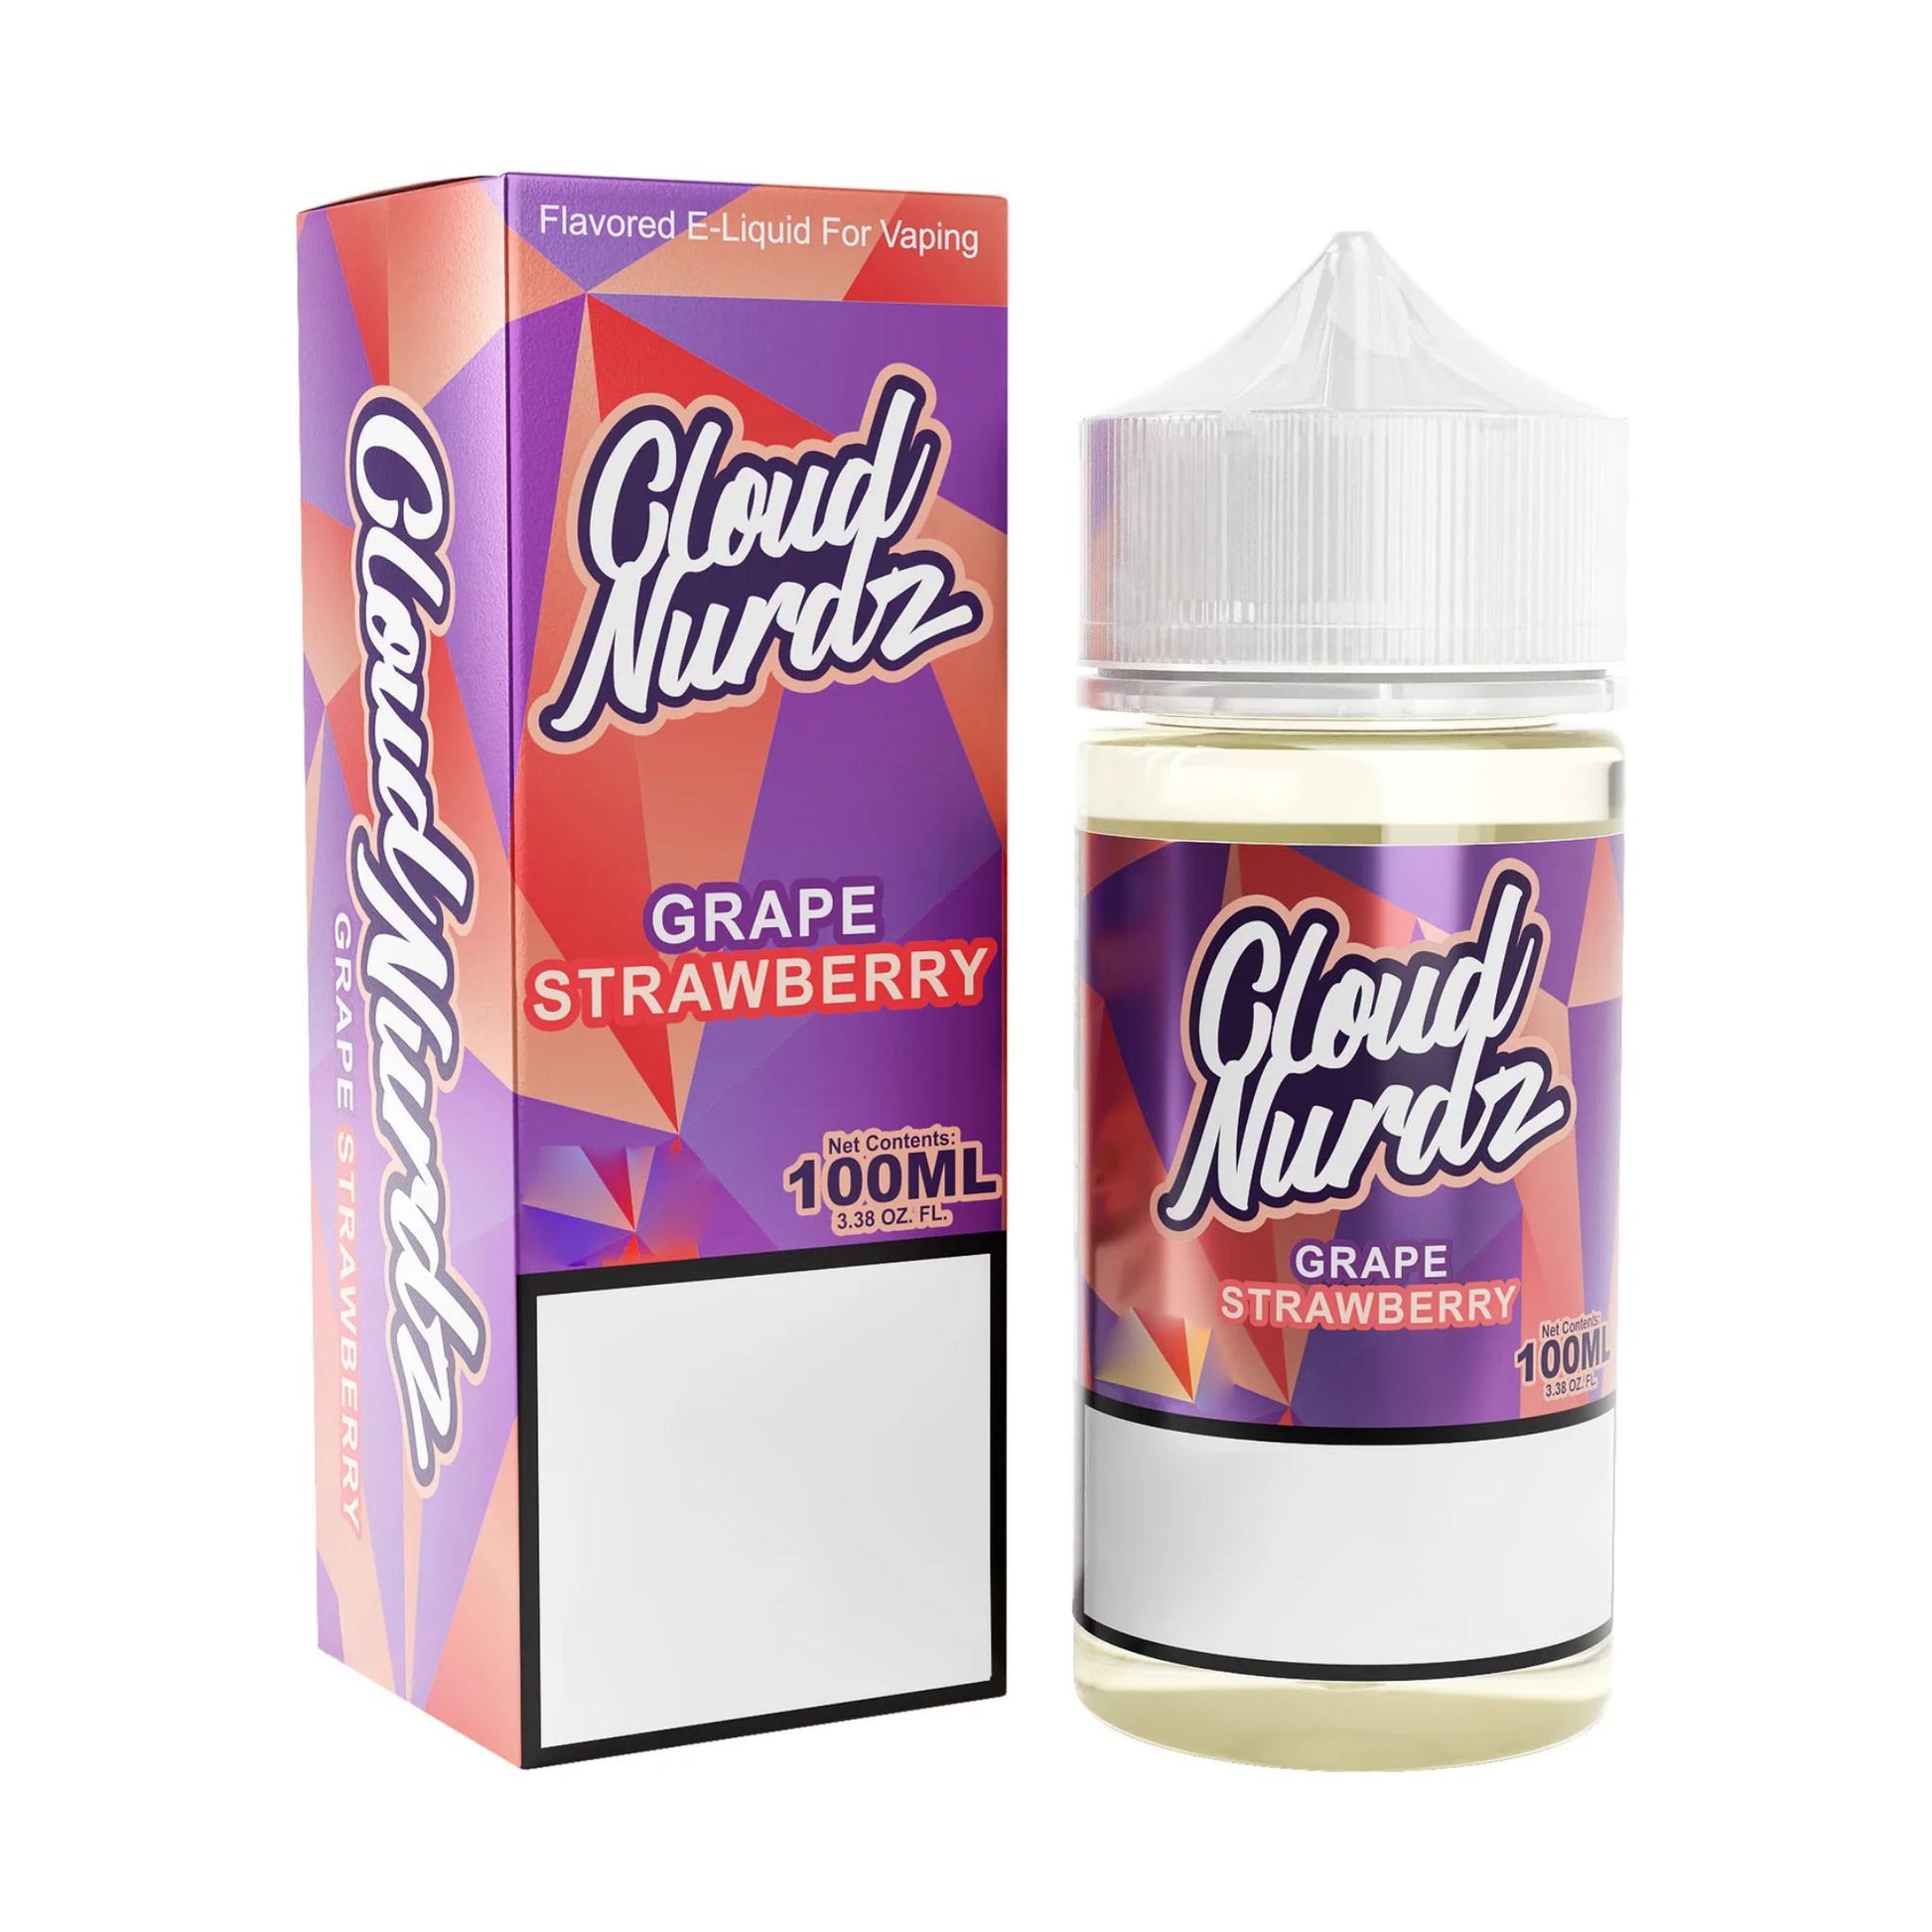 Cloud Nurdz | Grape Strawberry | 100ml bottle and box